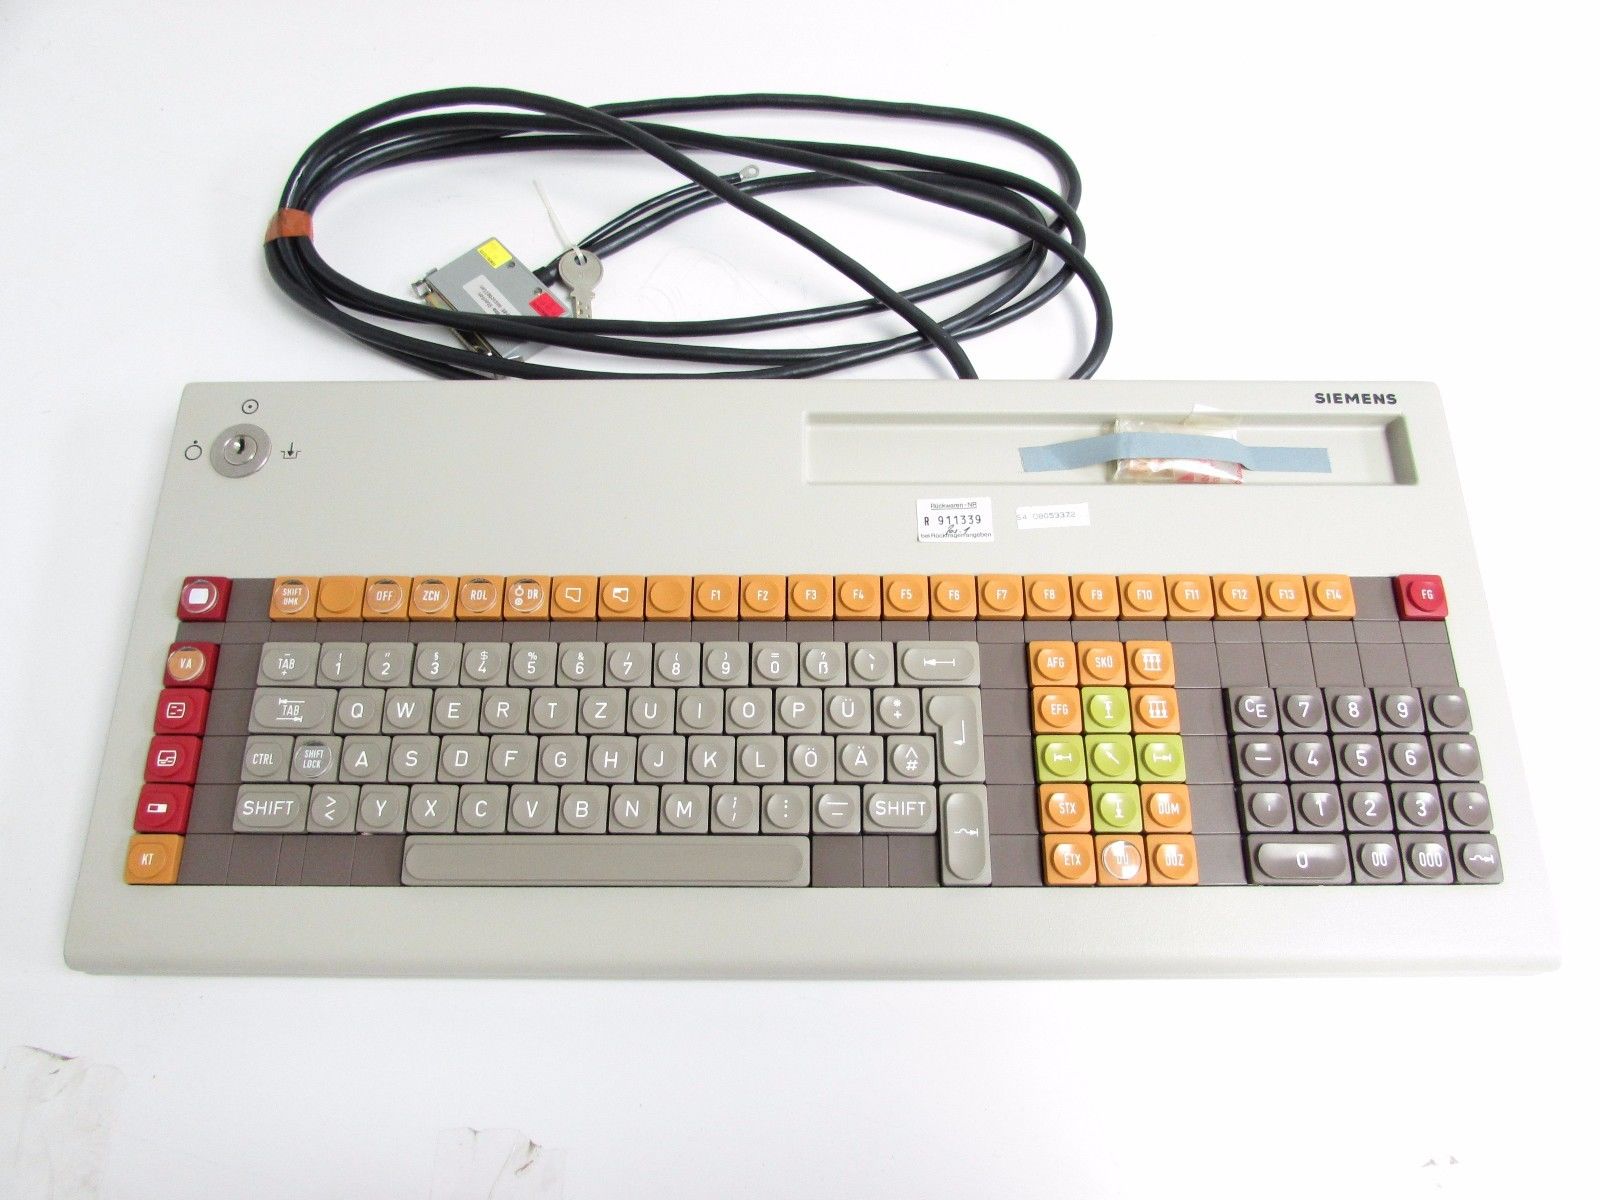 Siemens Datensichtstation 3974R keyboard